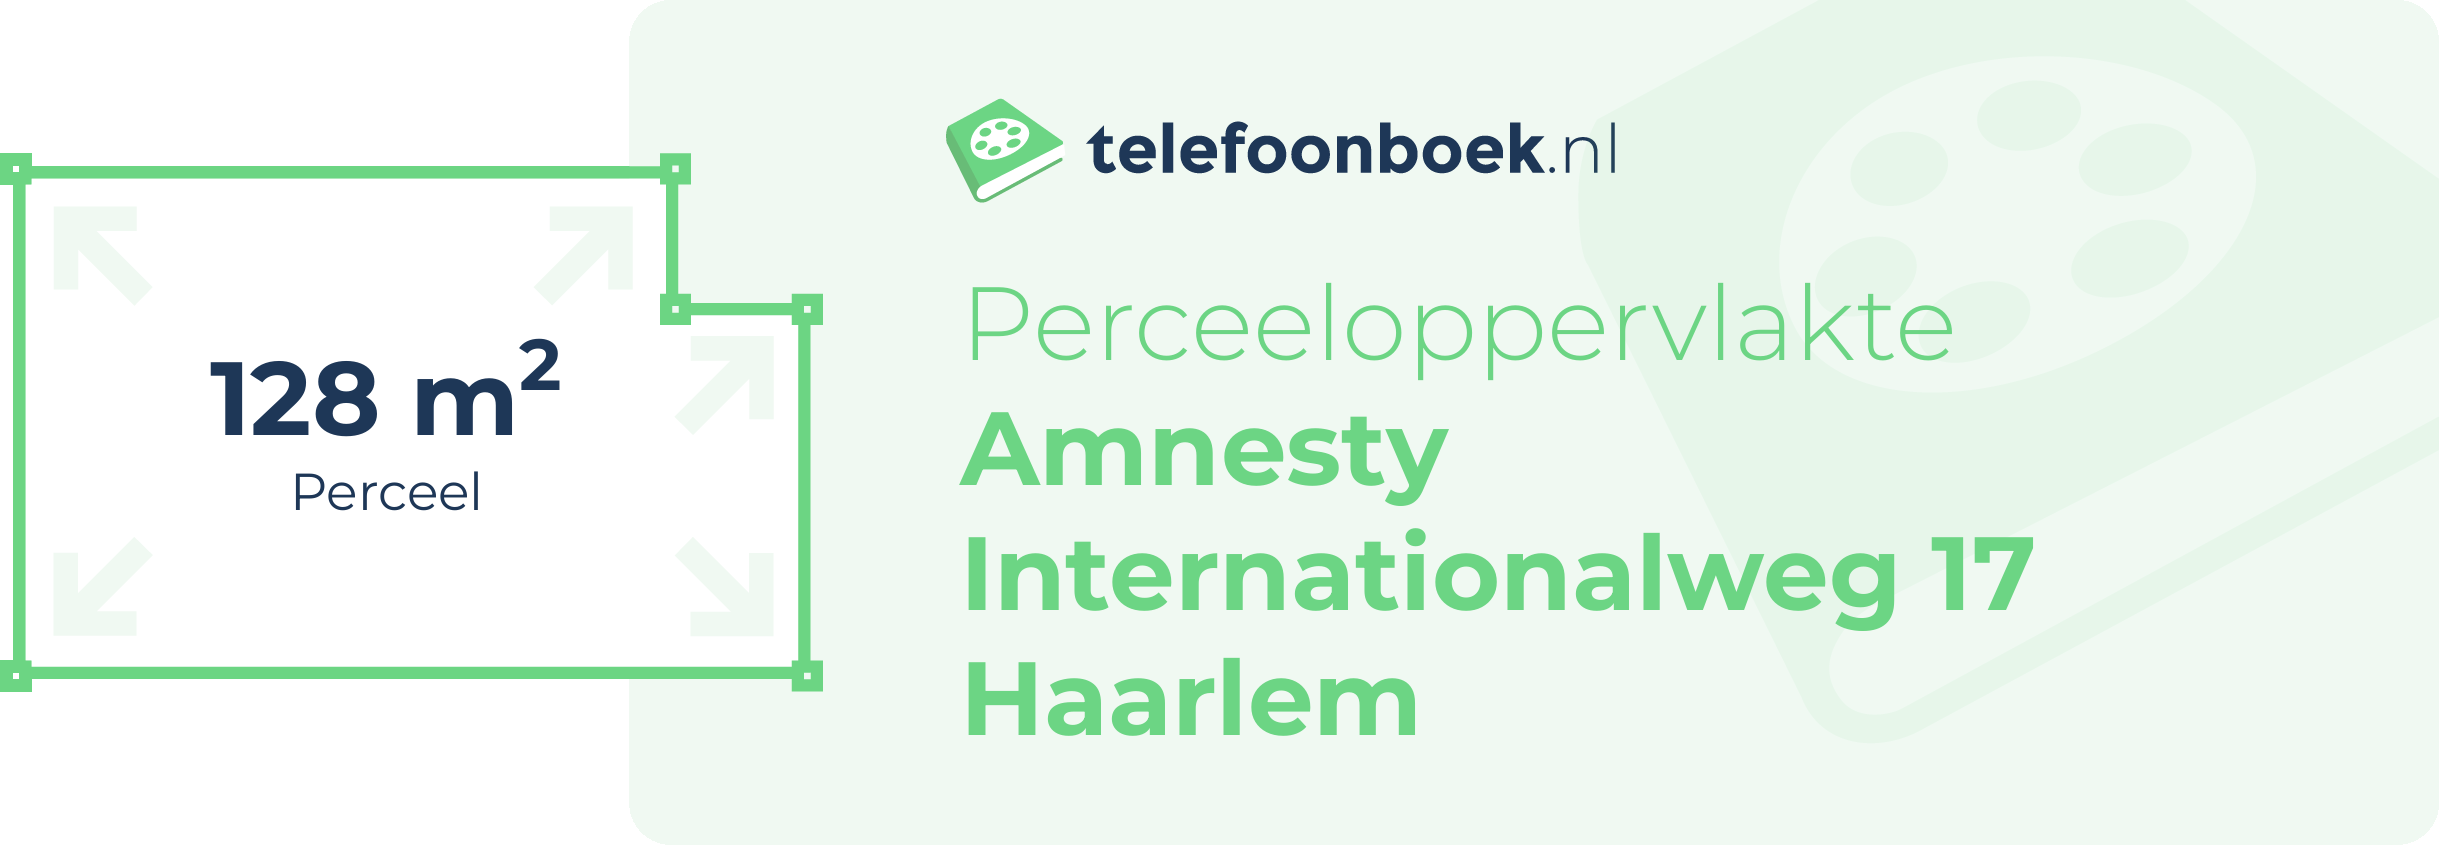 Perceeloppervlakte Amnesty Internationalweg 17 Haarlem